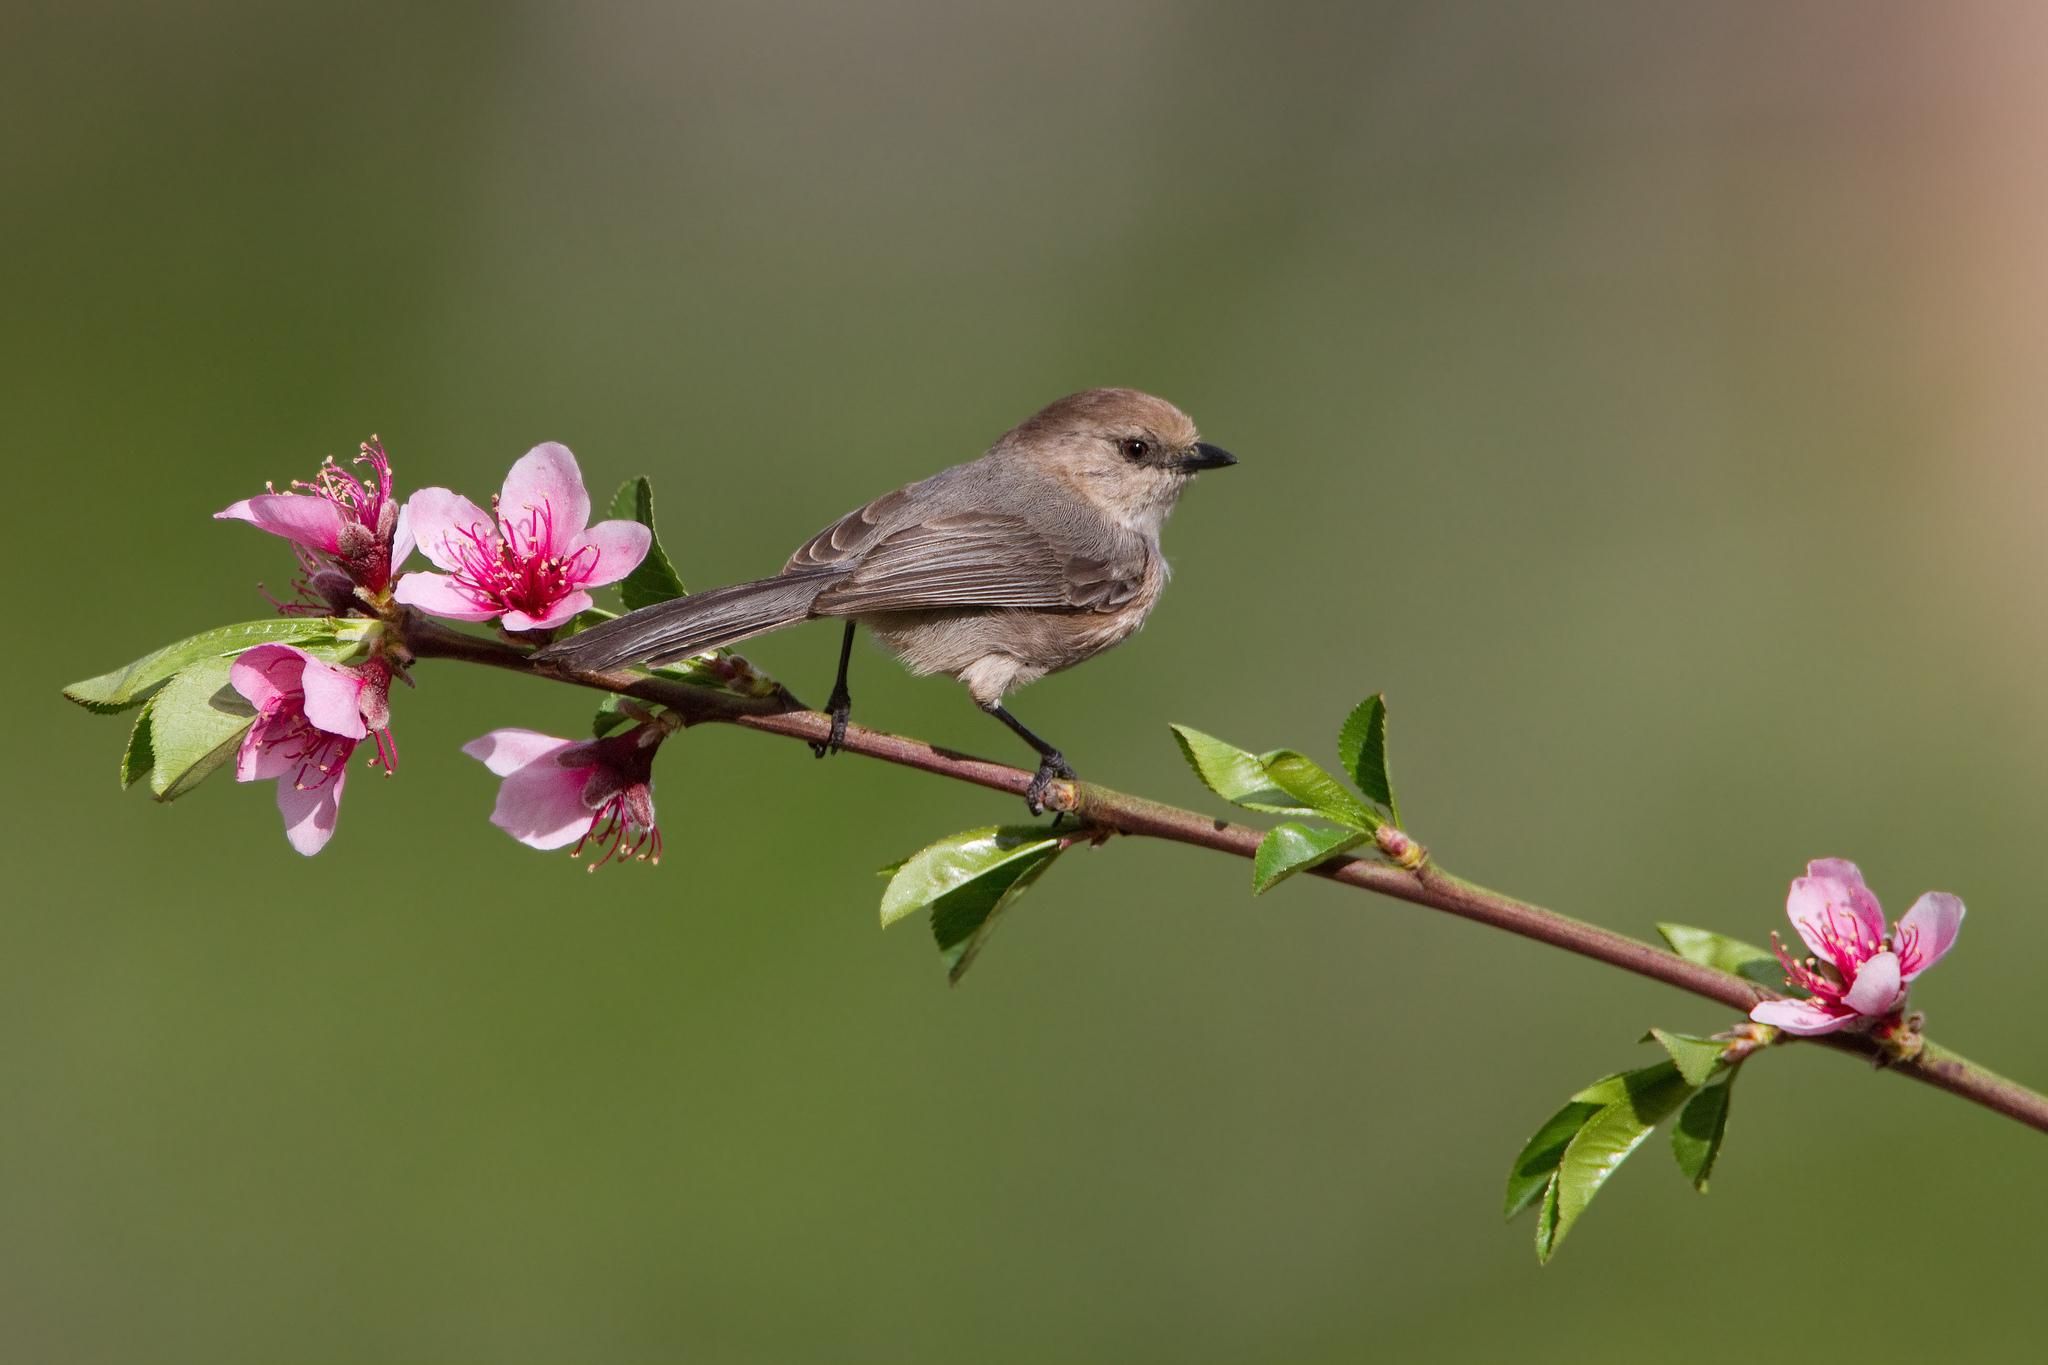 birds on flower branches | HD *** Bird on a flowering tree branch ...